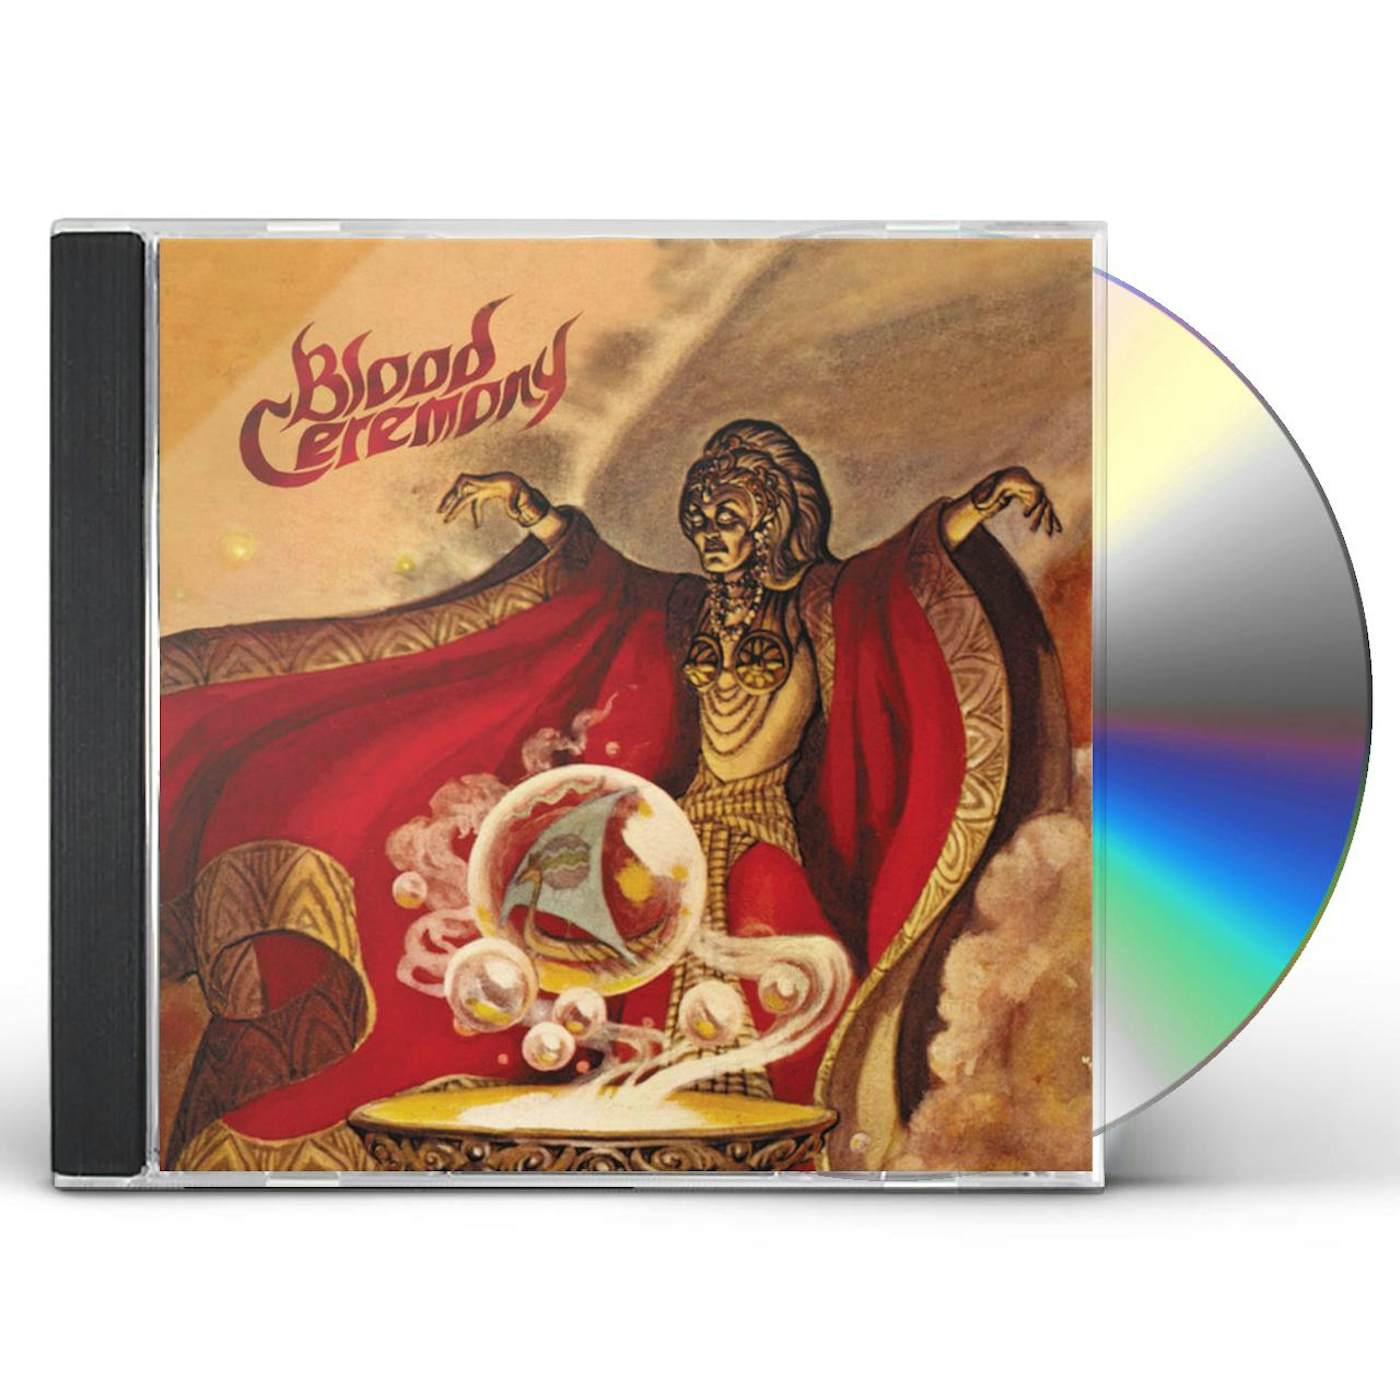 BLOOD CEREMONY CD